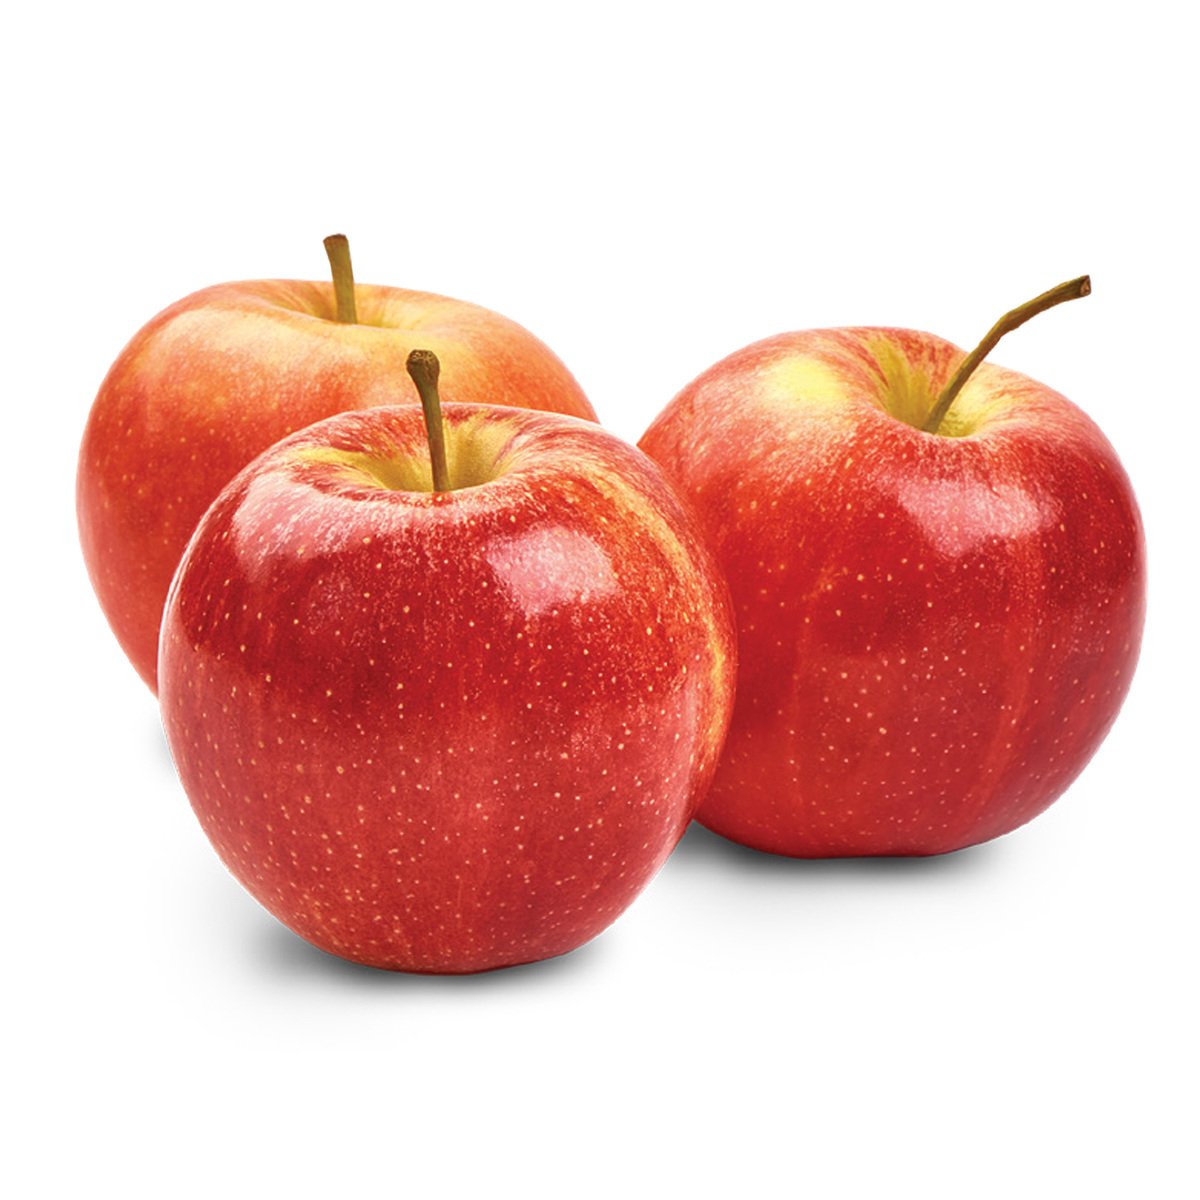 Apple Red Iran 1kg Online at Best Price, Apples